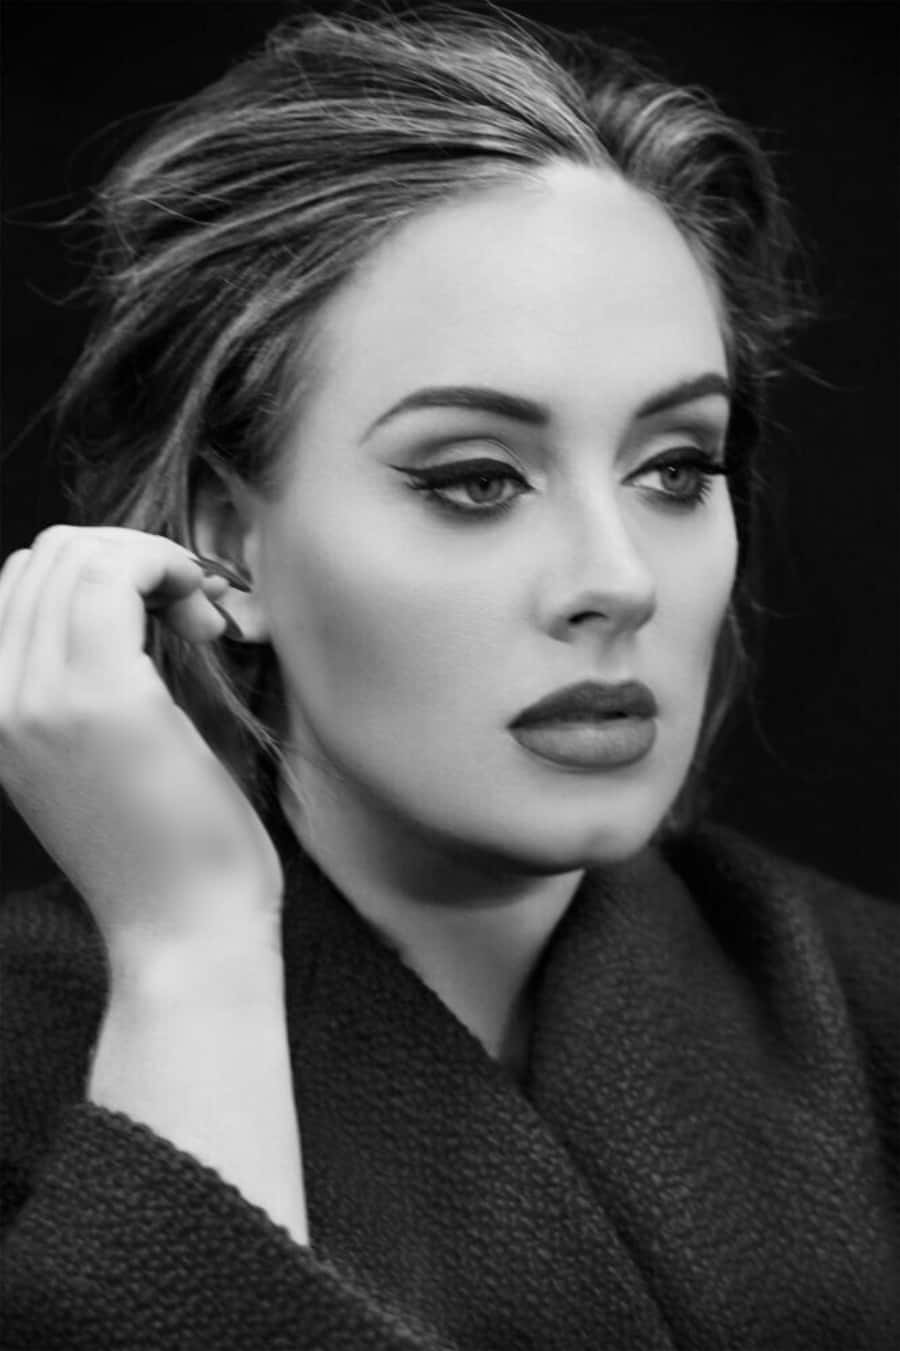 Adele embodies unmistakable talent